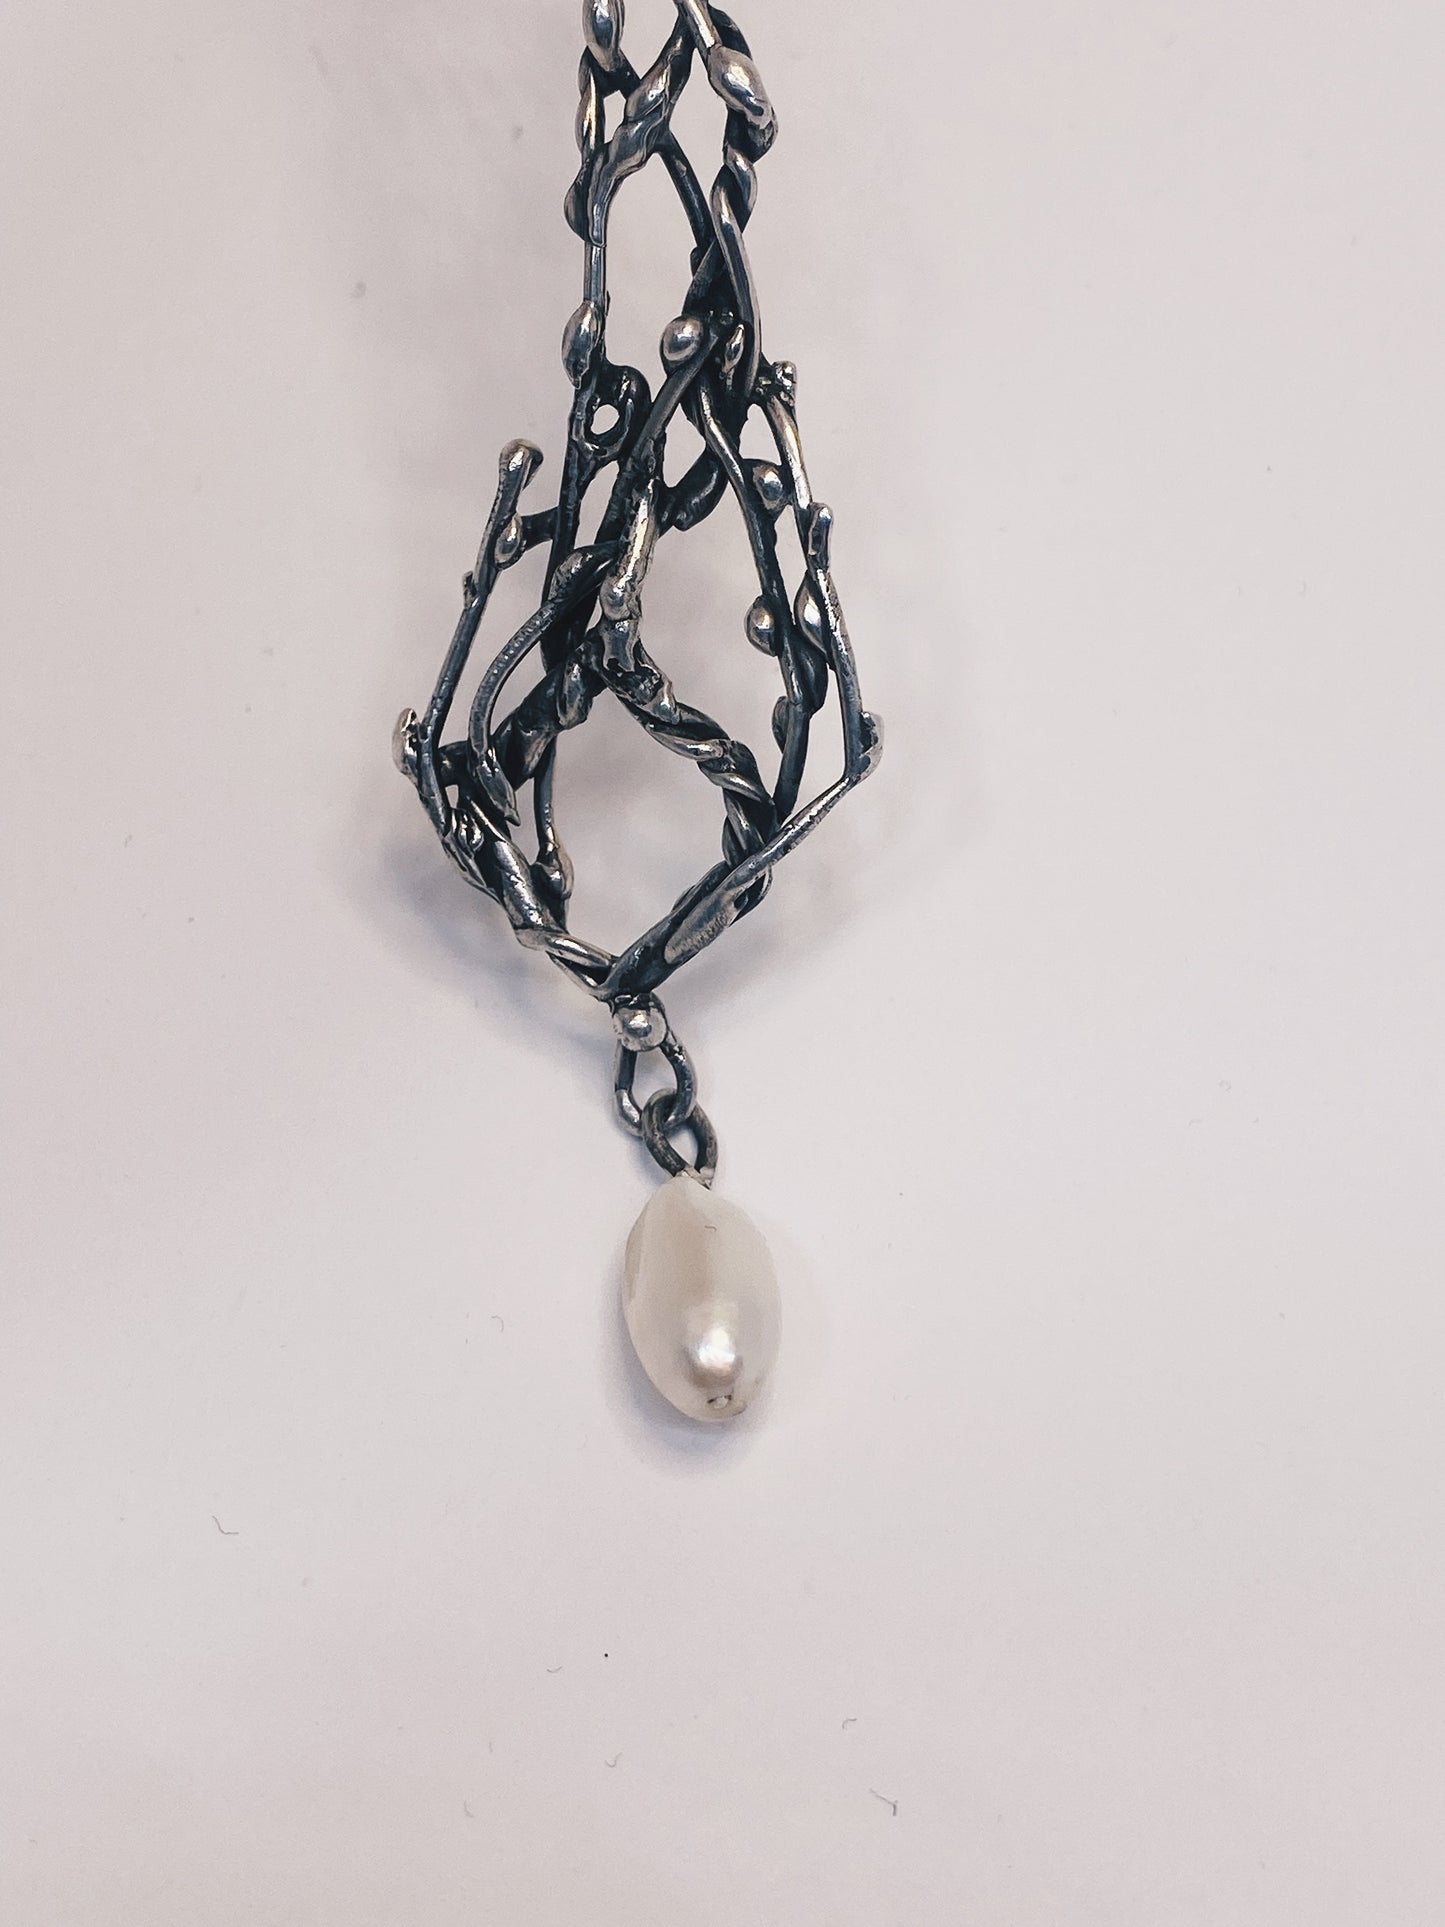 ᠅ sunken city ᠅ sage's pearl pendant